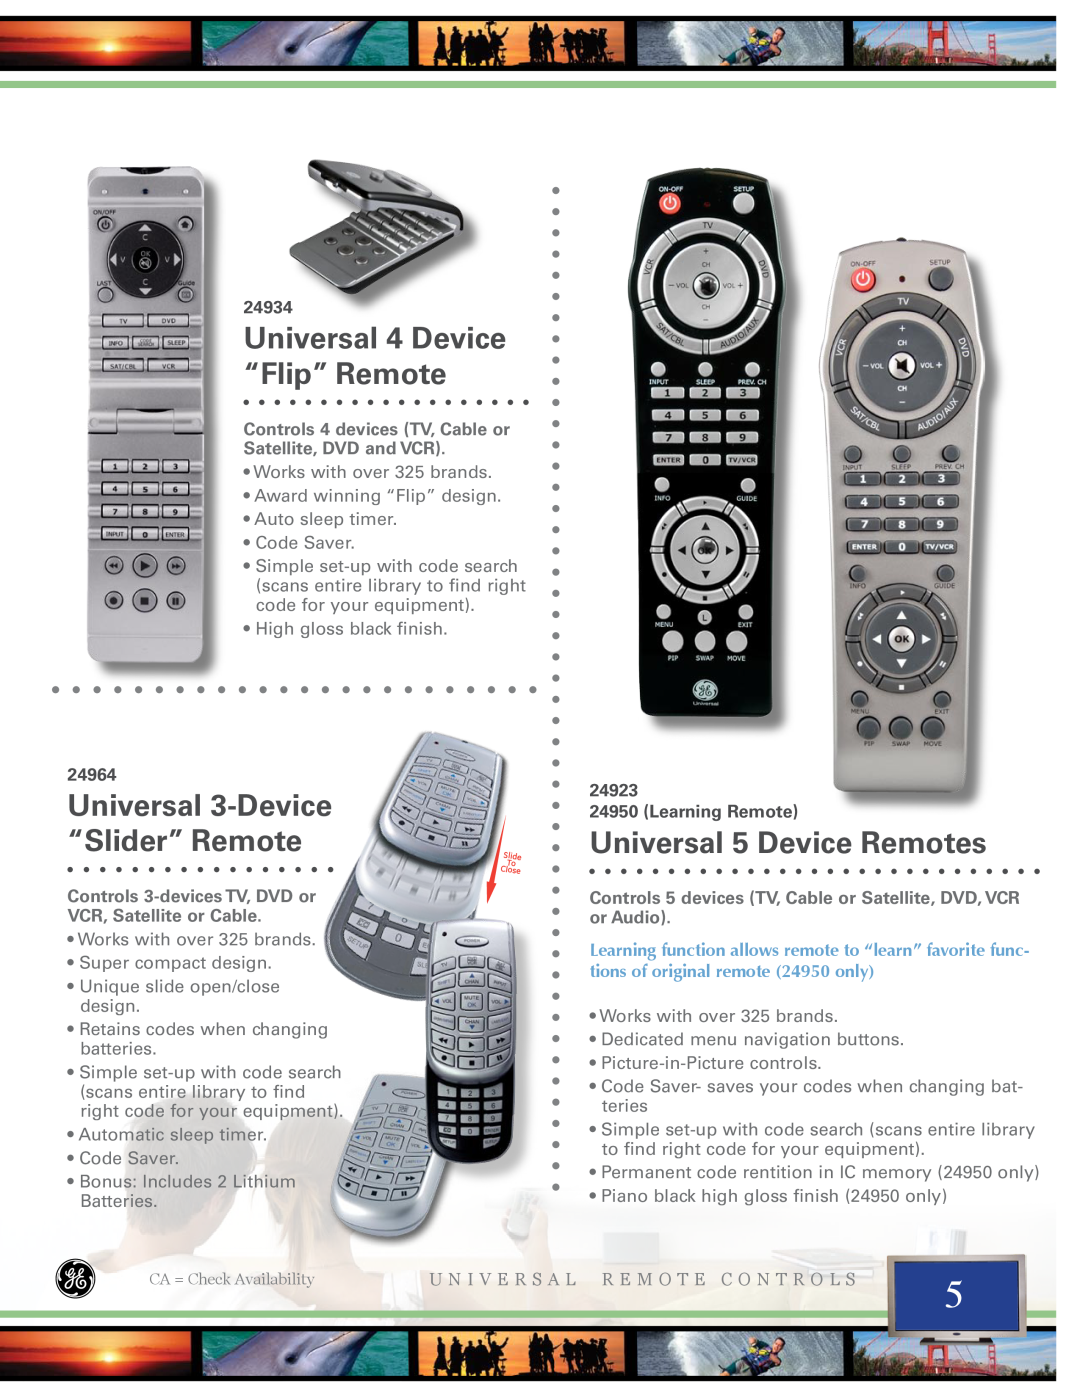 Jasco 24965 manual Universal 4 Device “Flip” Remote, Universal 3-Device, “Slider” Remote, Universal 5 Device Remotes, 24934 